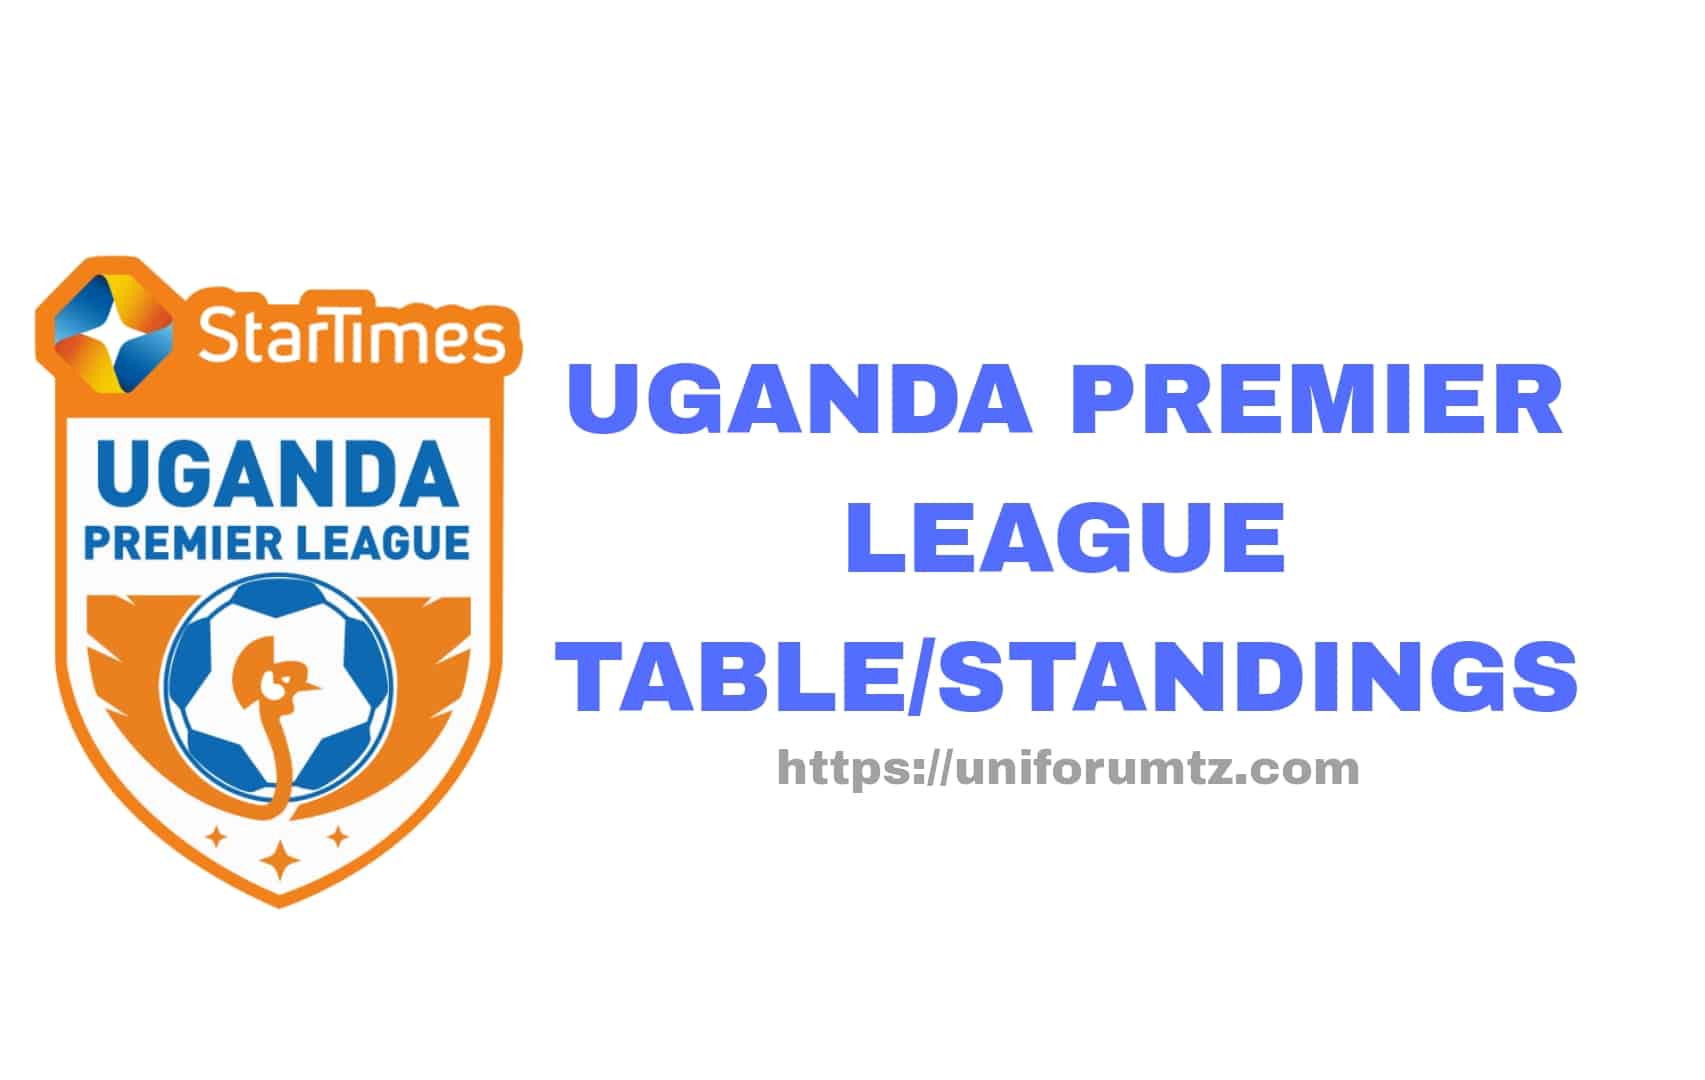 Uganda Premier League Table/Standings 2022/2023